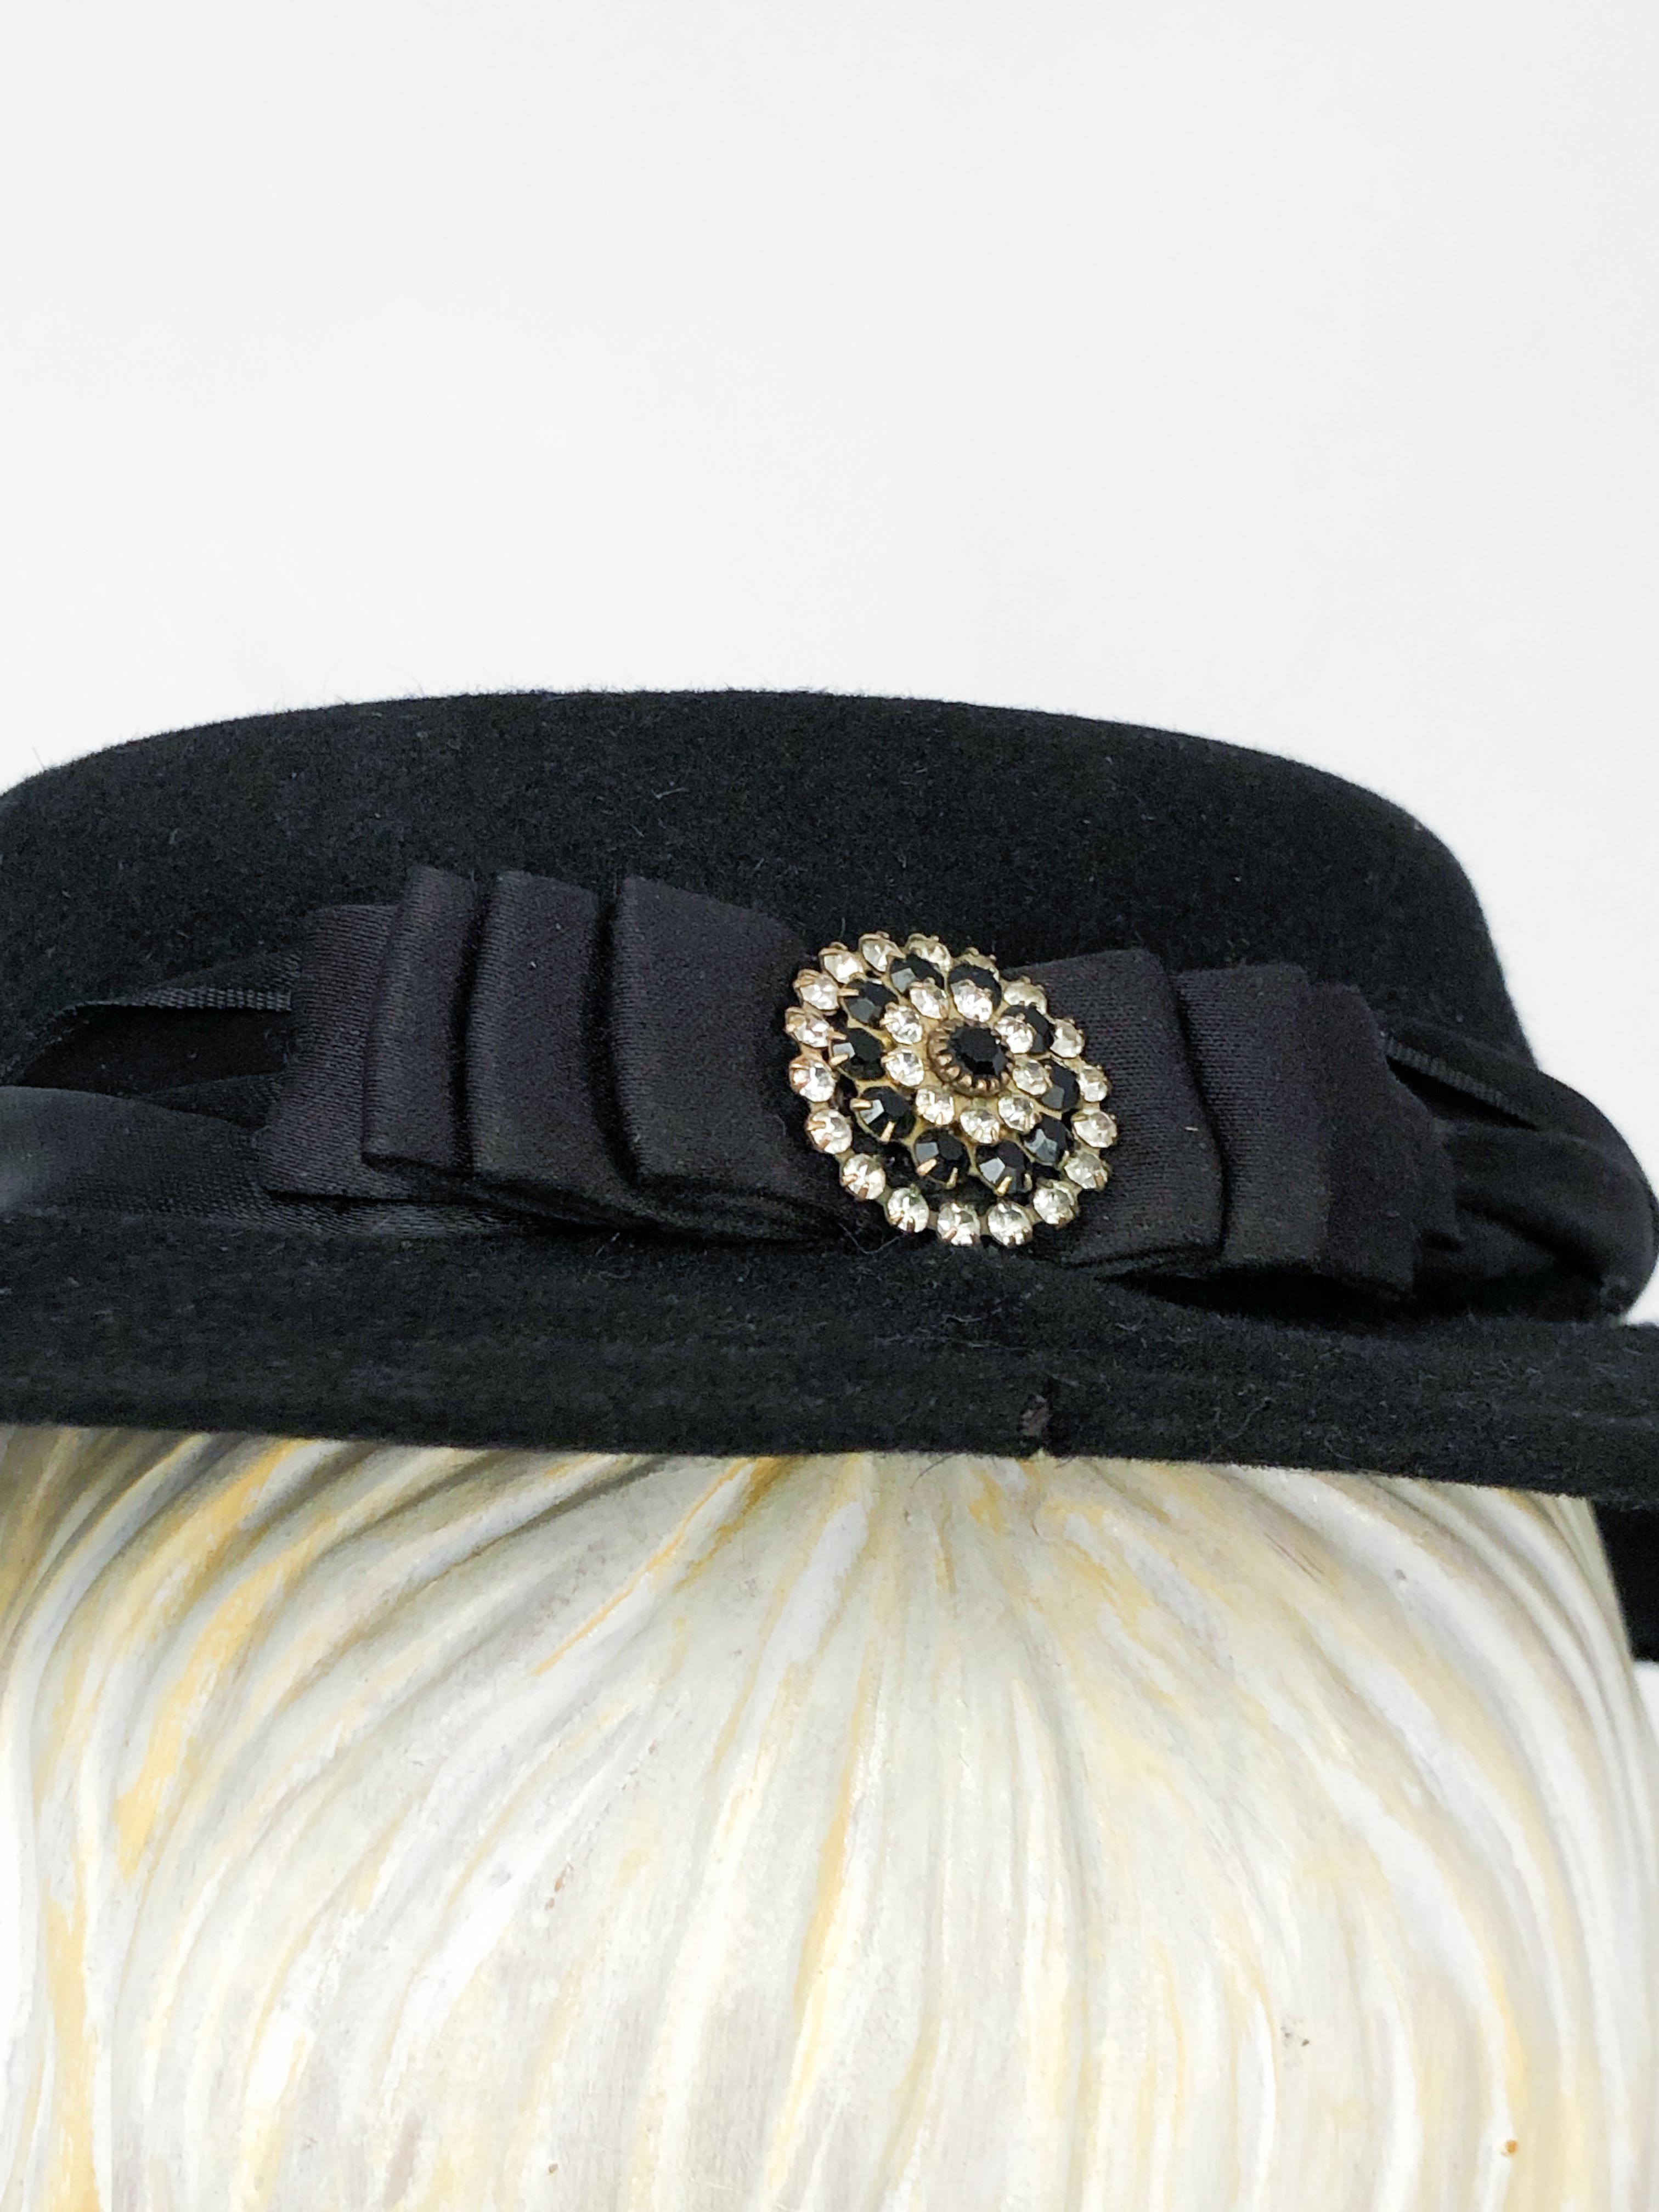 1940s womens hats